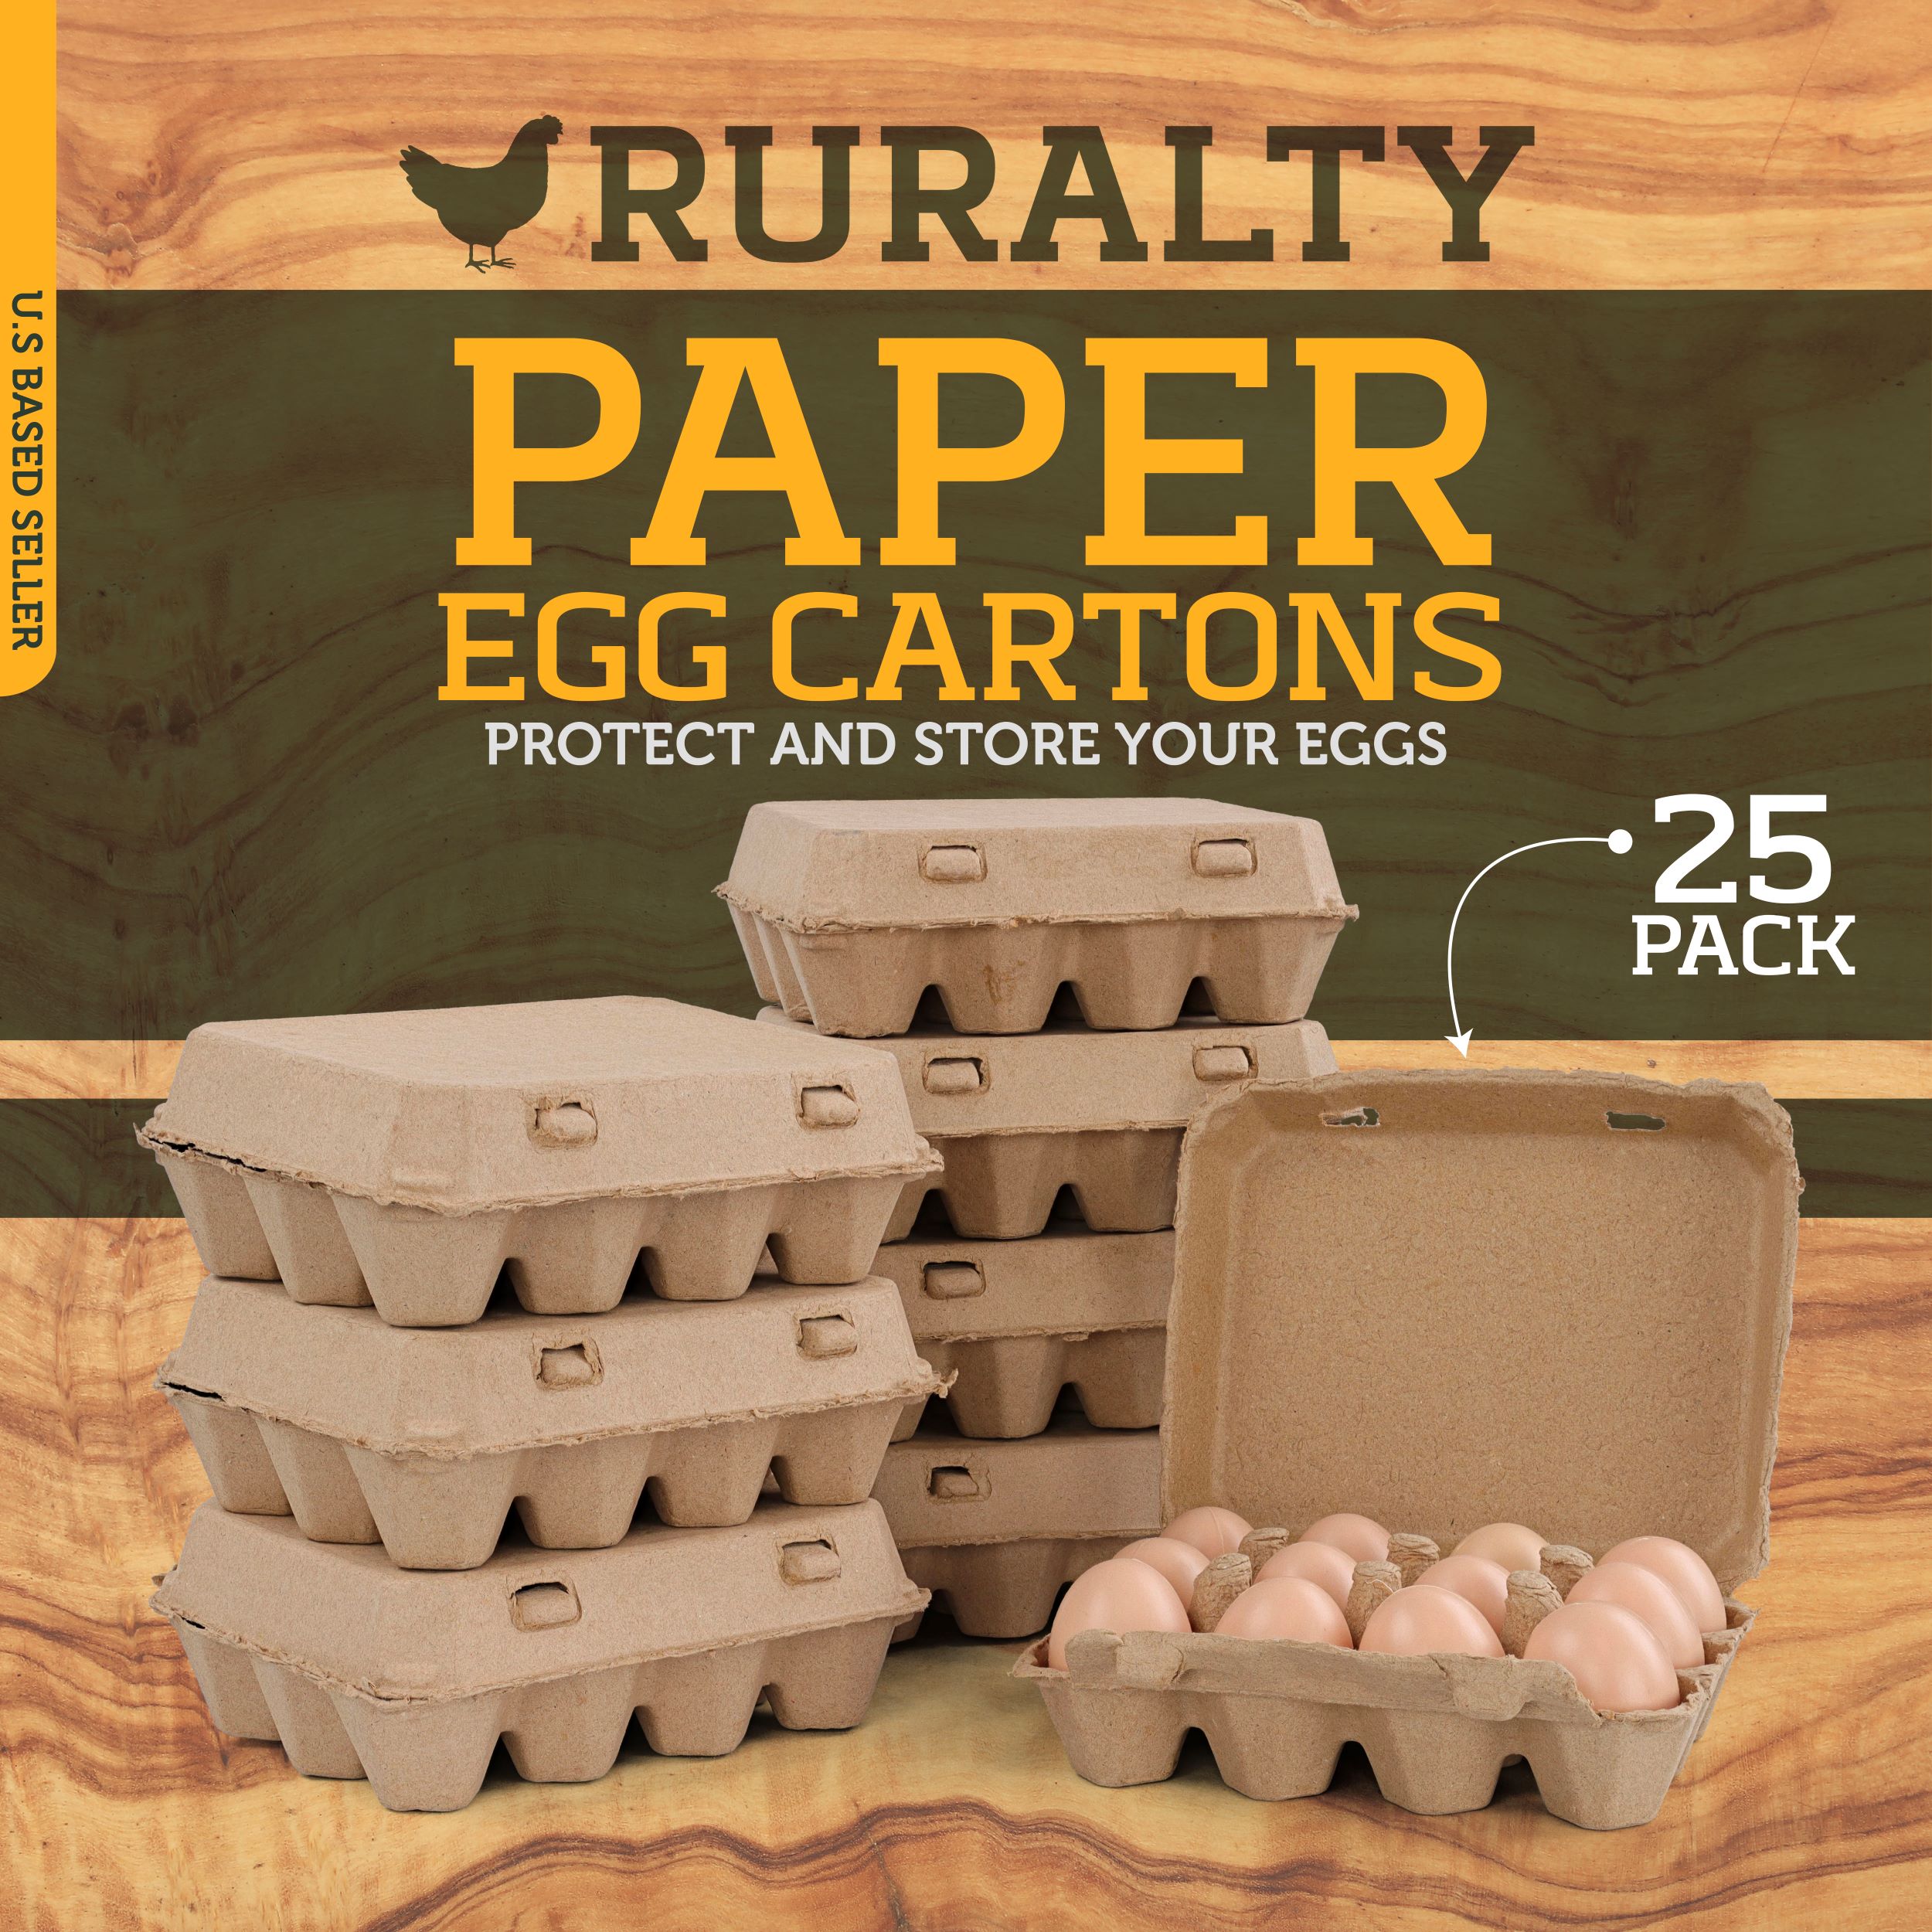 Ruralty Recycled Cardboard Egg Cartons 25ct Dozen 4x3 Vintage Bulk Egg Cartons - image 2 of 7